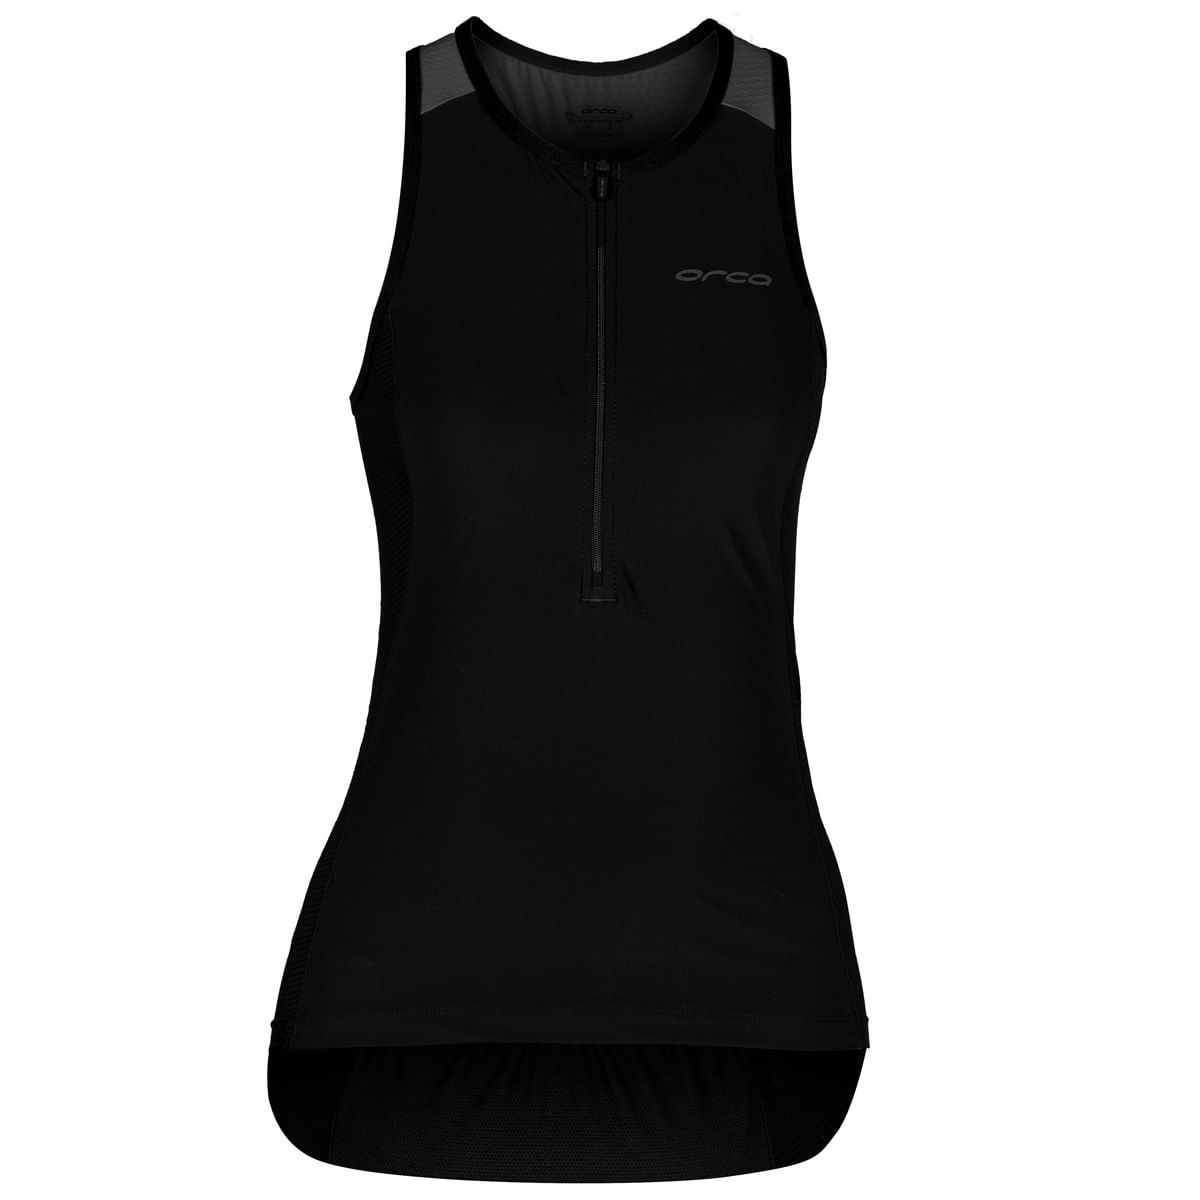 Orca Athlex Women's Sleeveless Top - size S